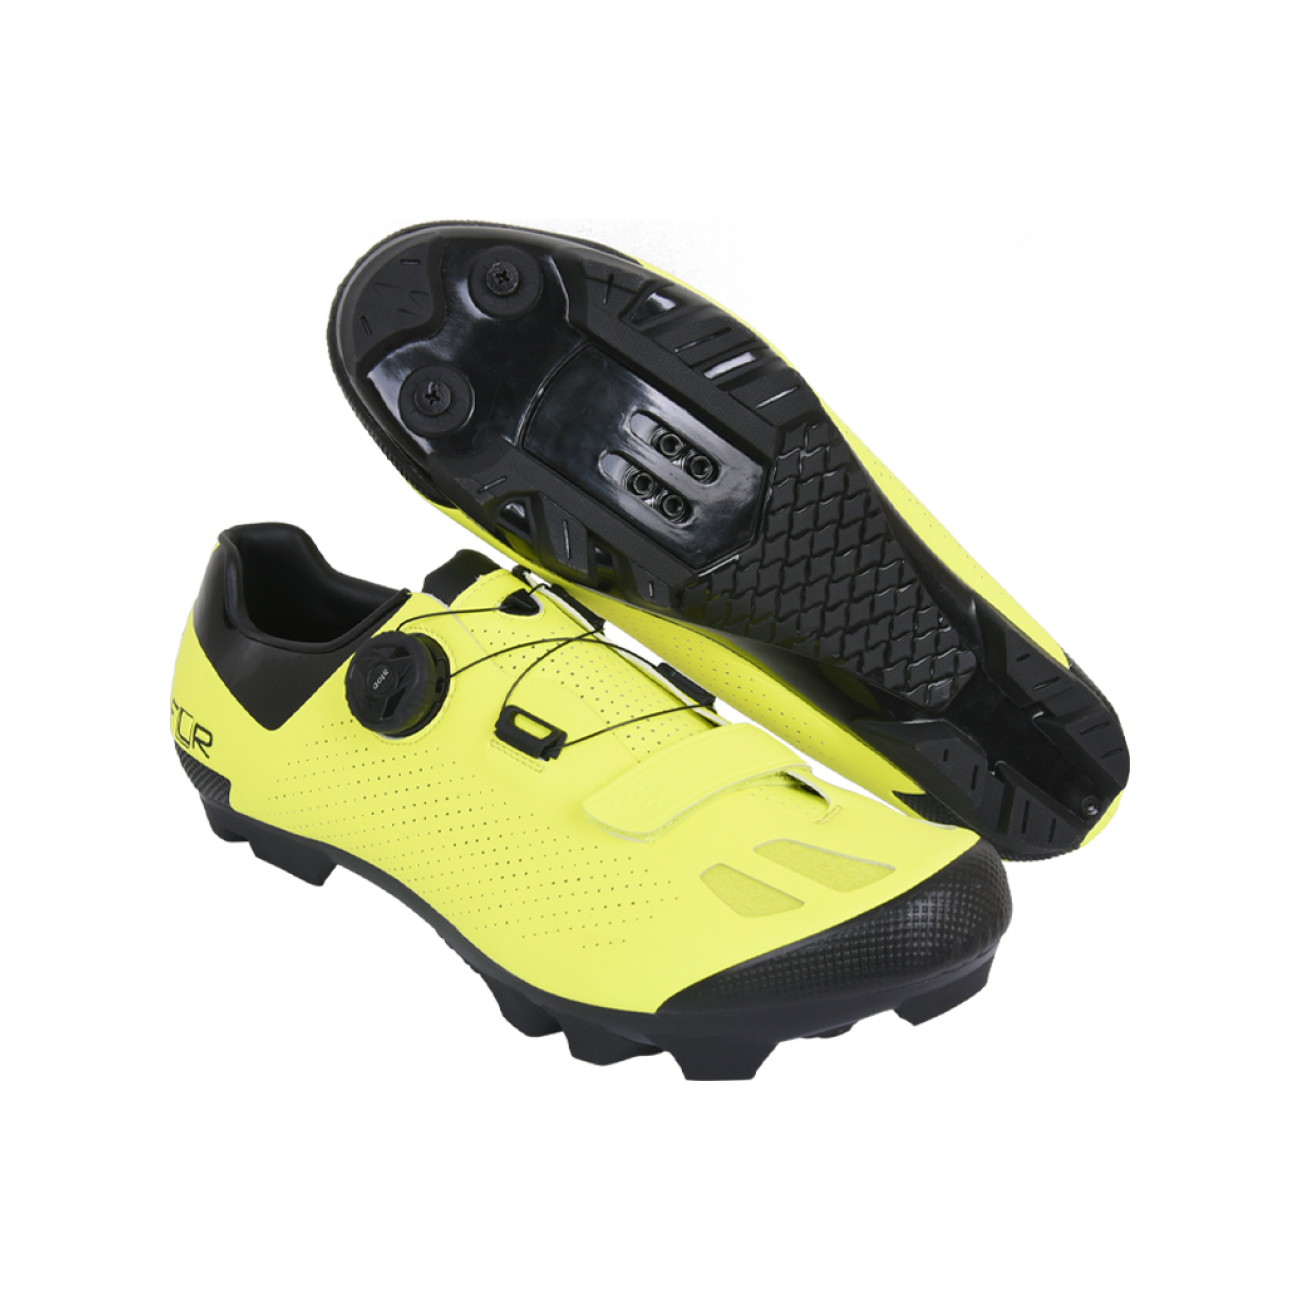 FLR Kerékpáros Cipő - F70 - Sárga